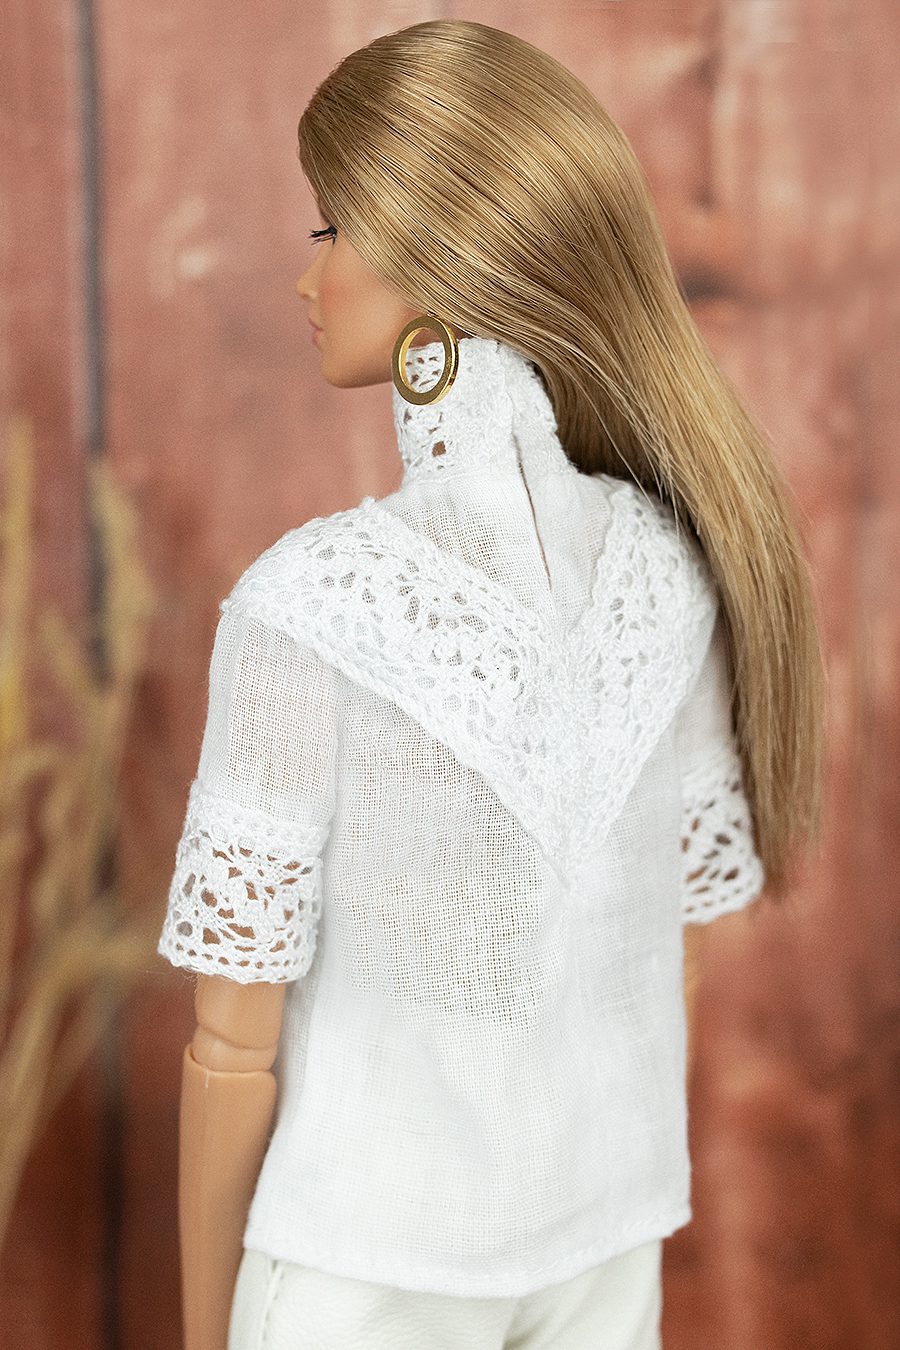 ELENPRIV white short sleeved batiste blouse w//lace Fashion Royalty FR:16 dolls